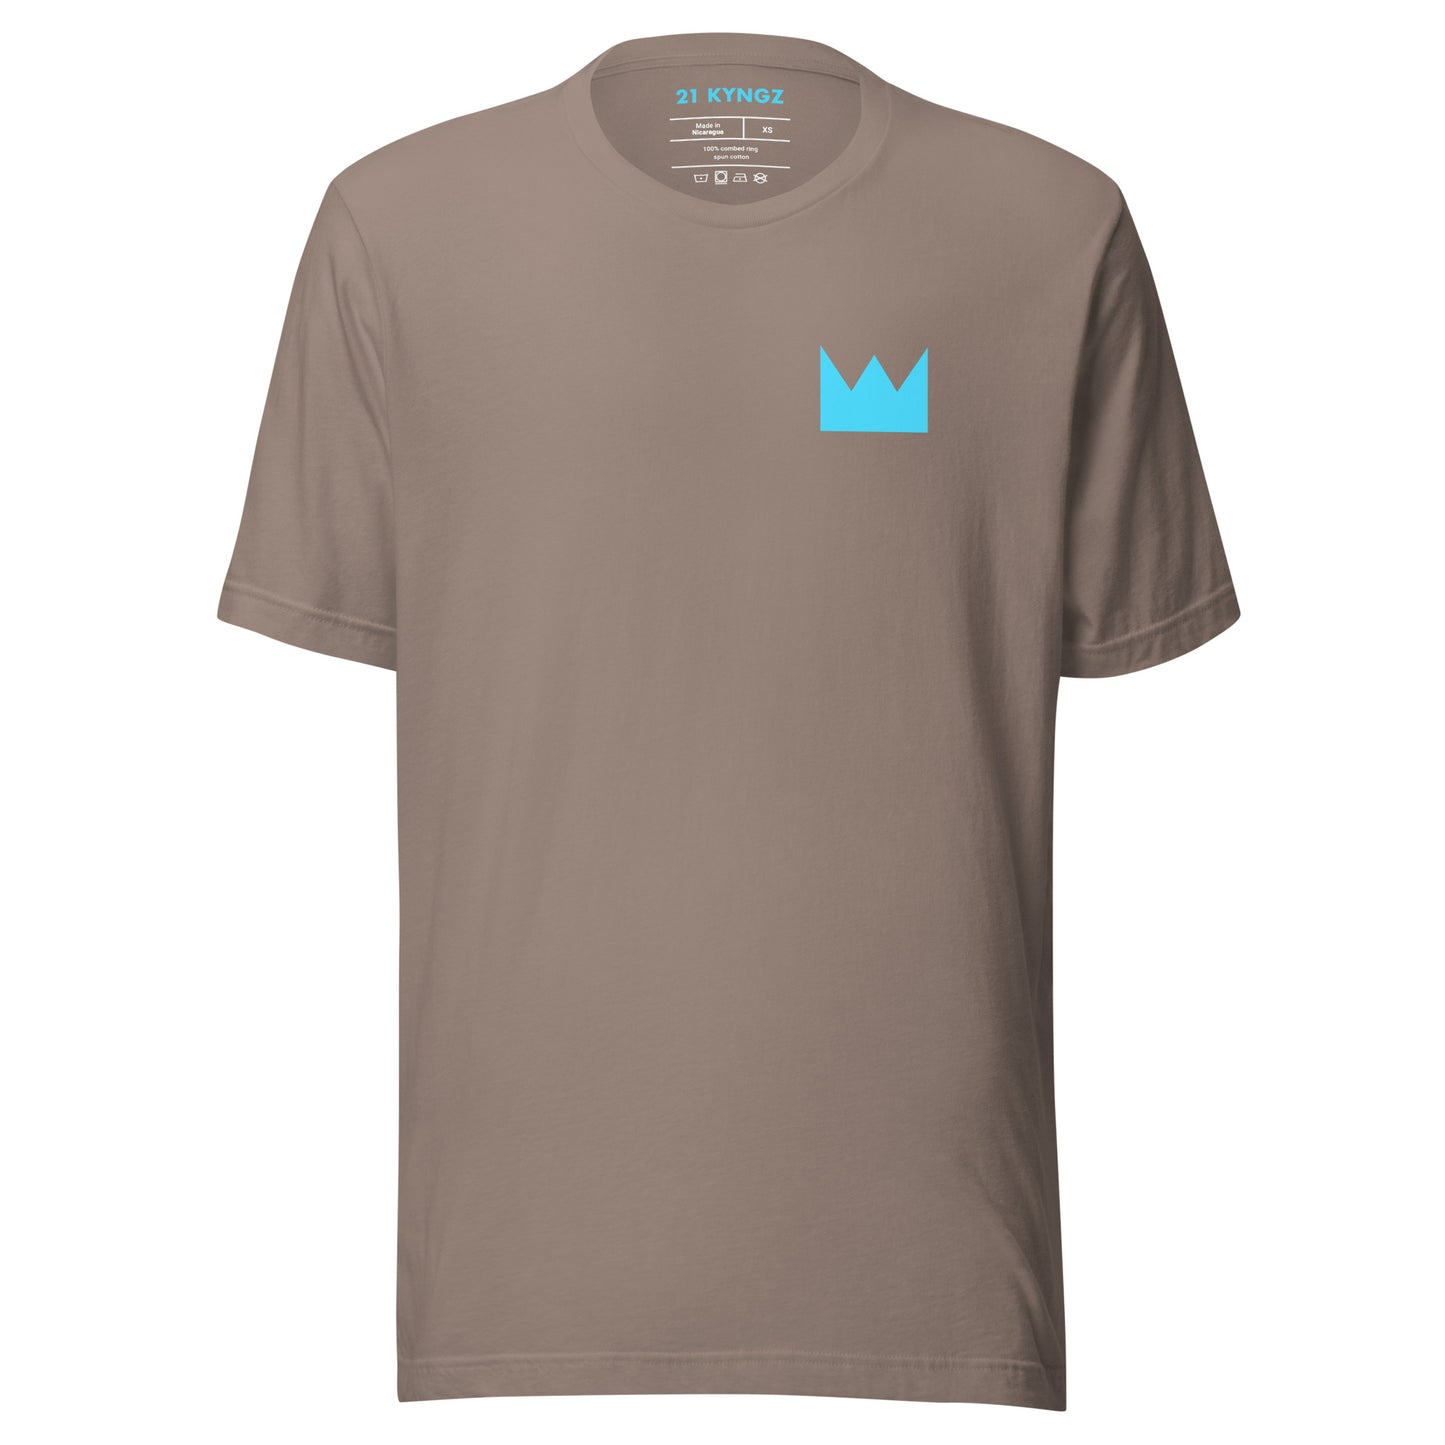 21 KYNGZ Little Crown (BB) Unisex t-shirt